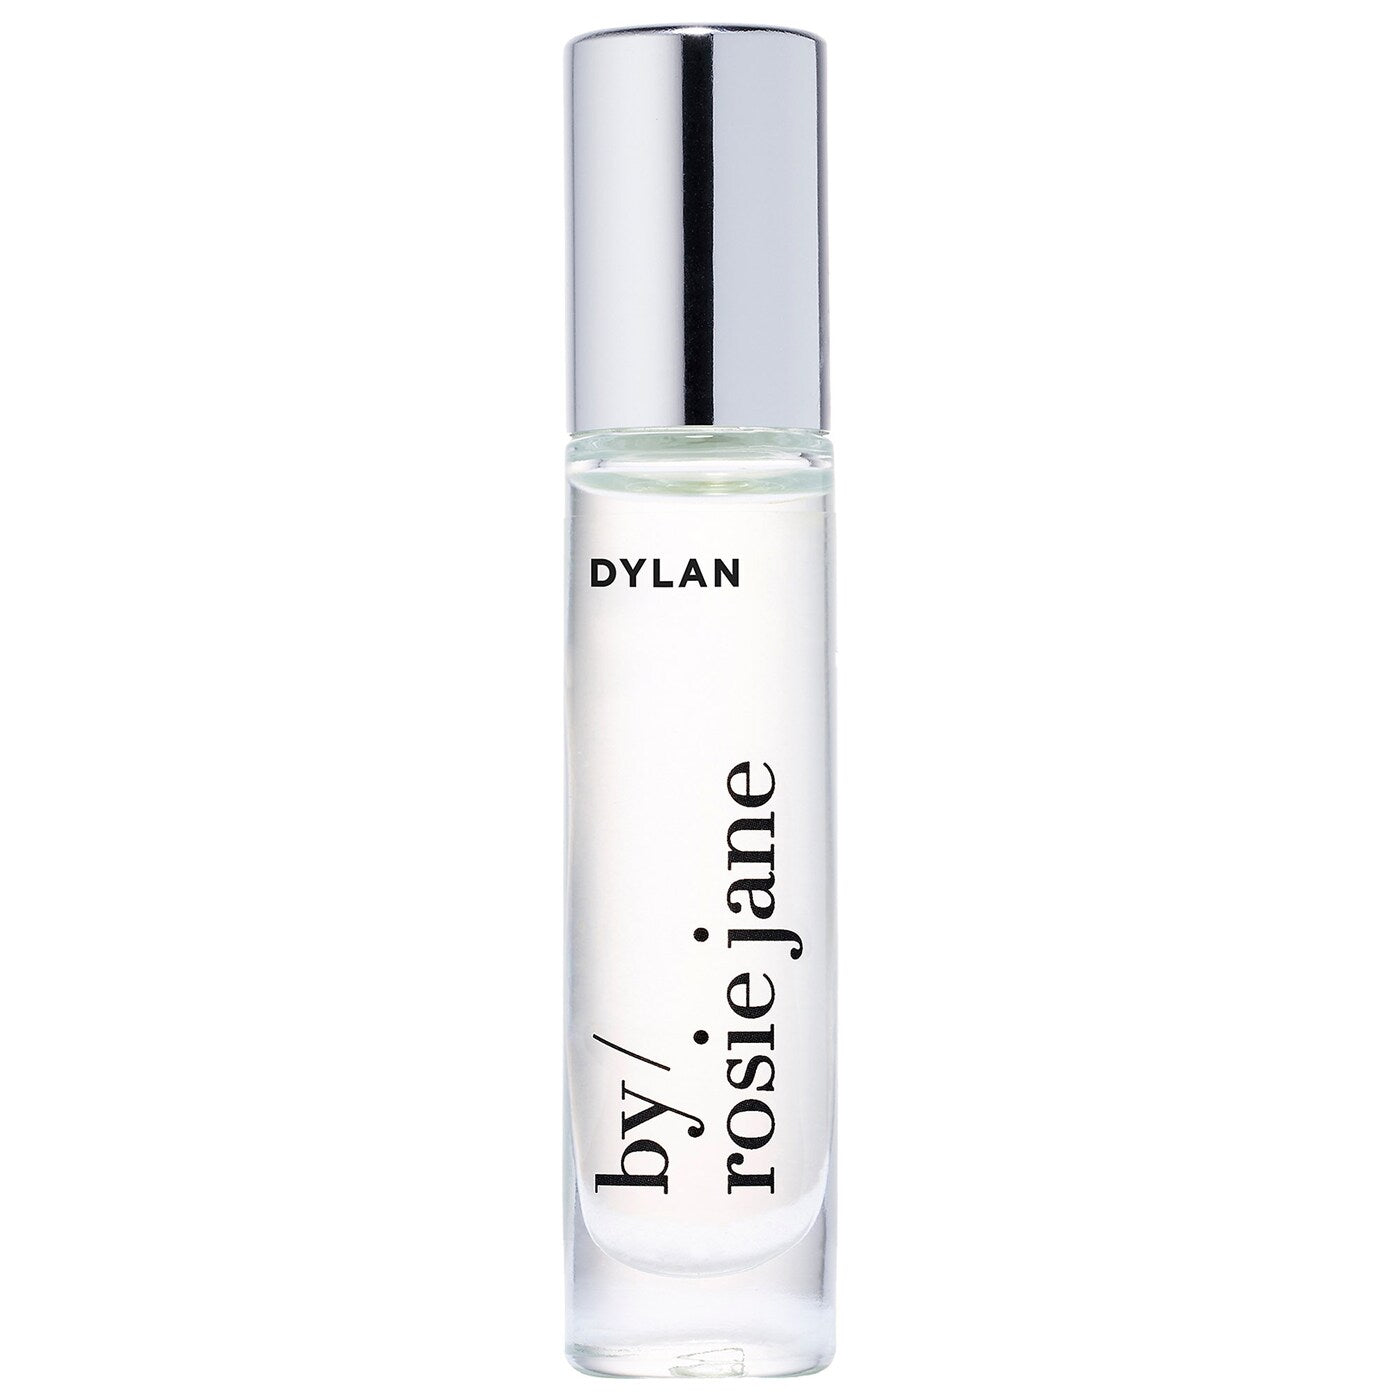 DYLAN Perfume Oil